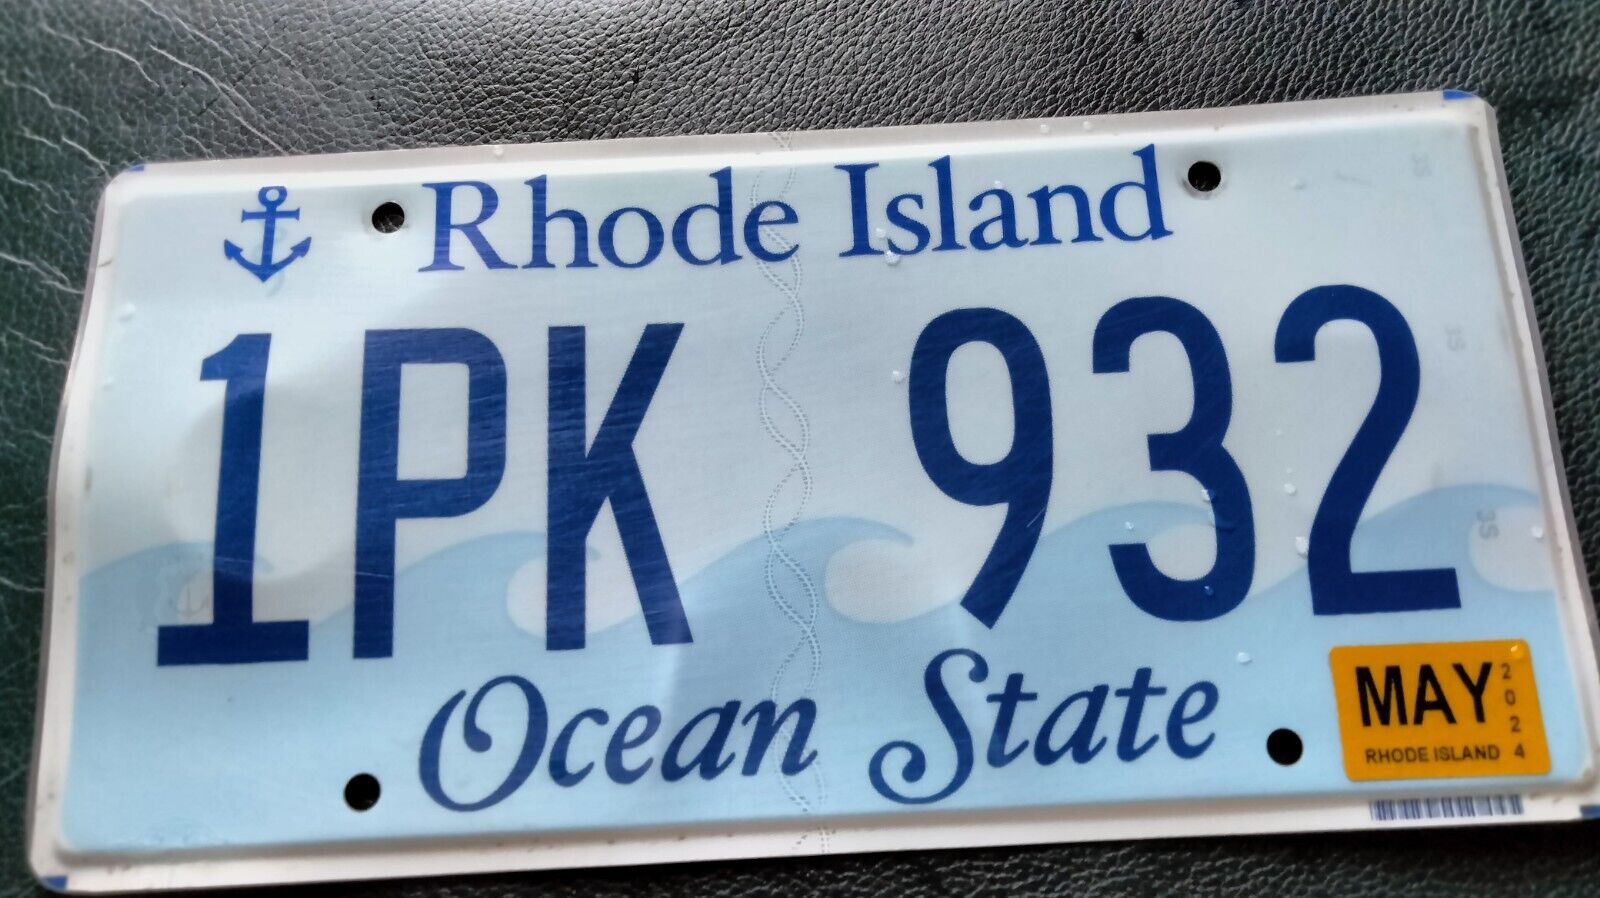 Rhode Island license plate # 1PK 932 - Ocean State